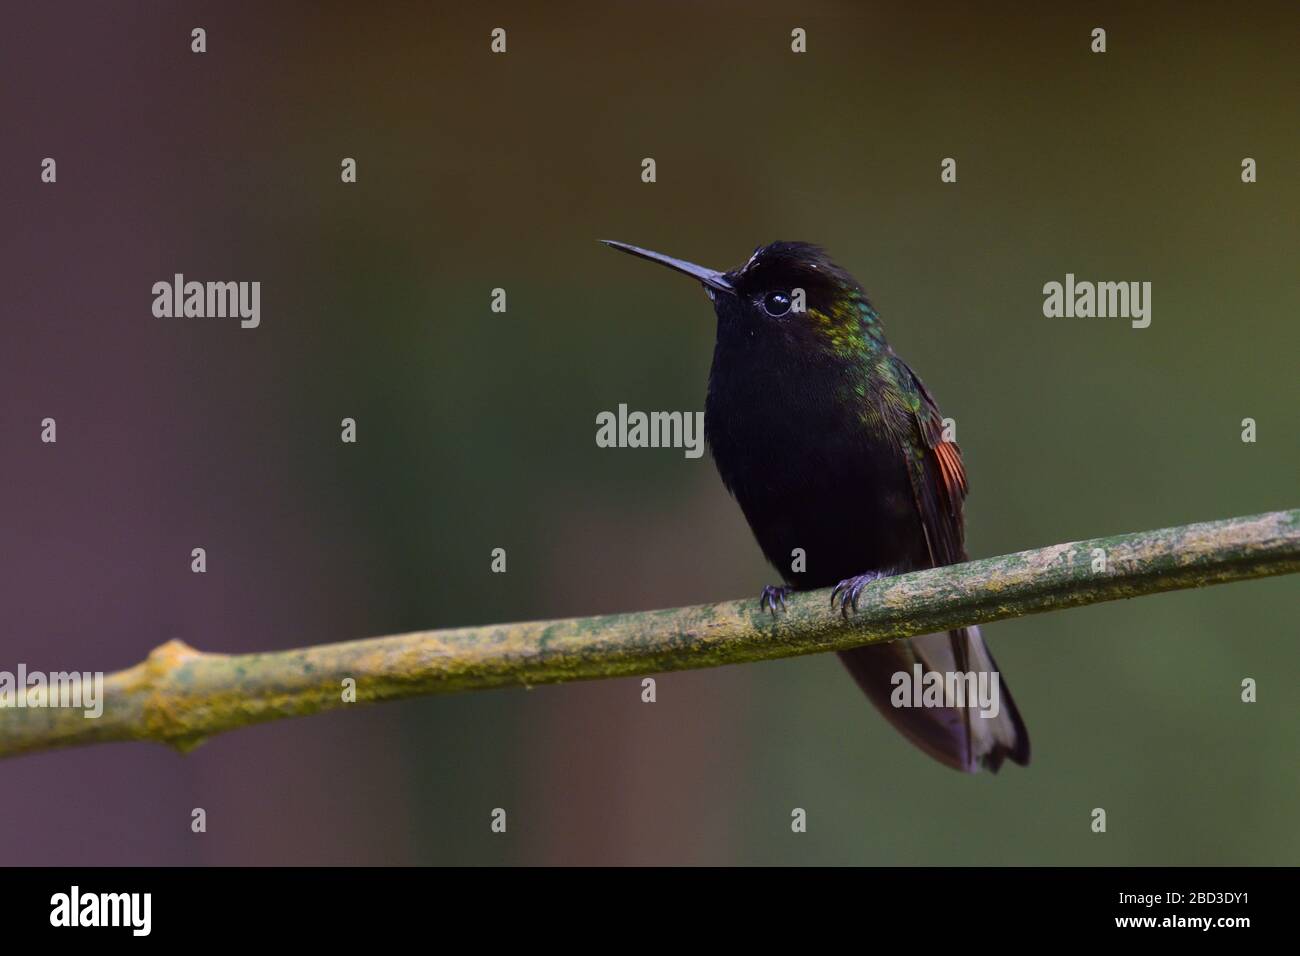 Brasil panama fotografías e imágenes de alta resolución - Alamy